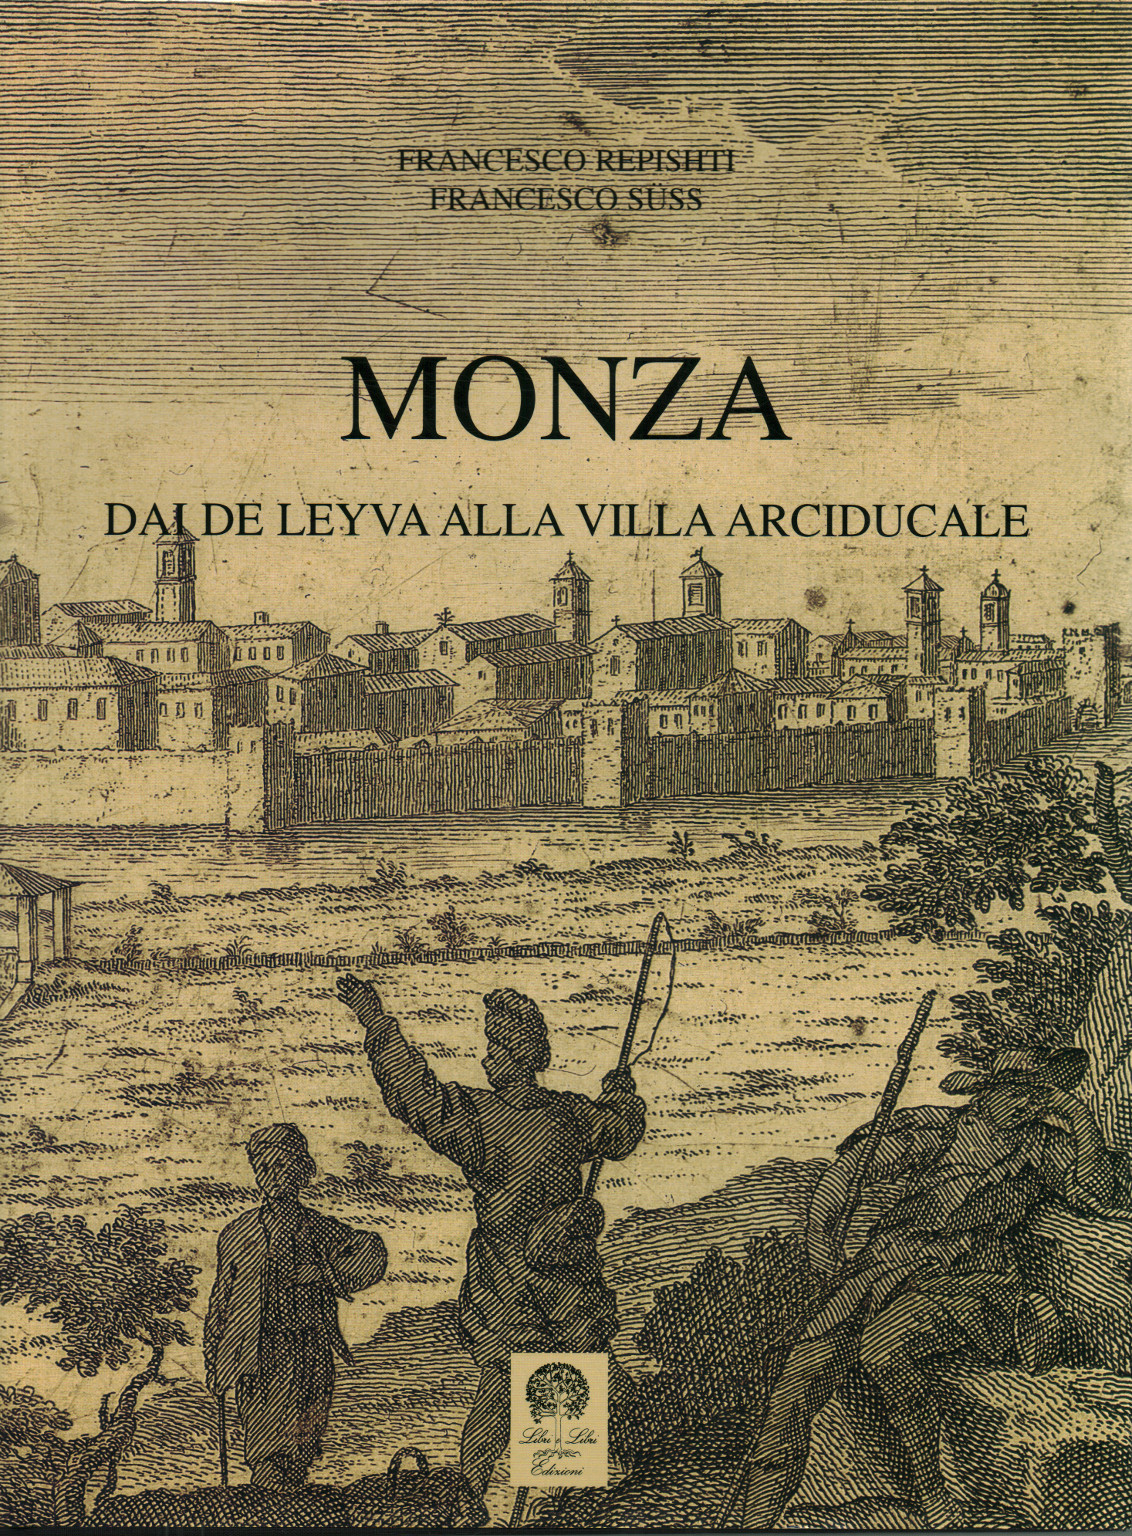 Monza. From De Leyva to the Villa Arciducale, Francesco Repishti Francesco Suss